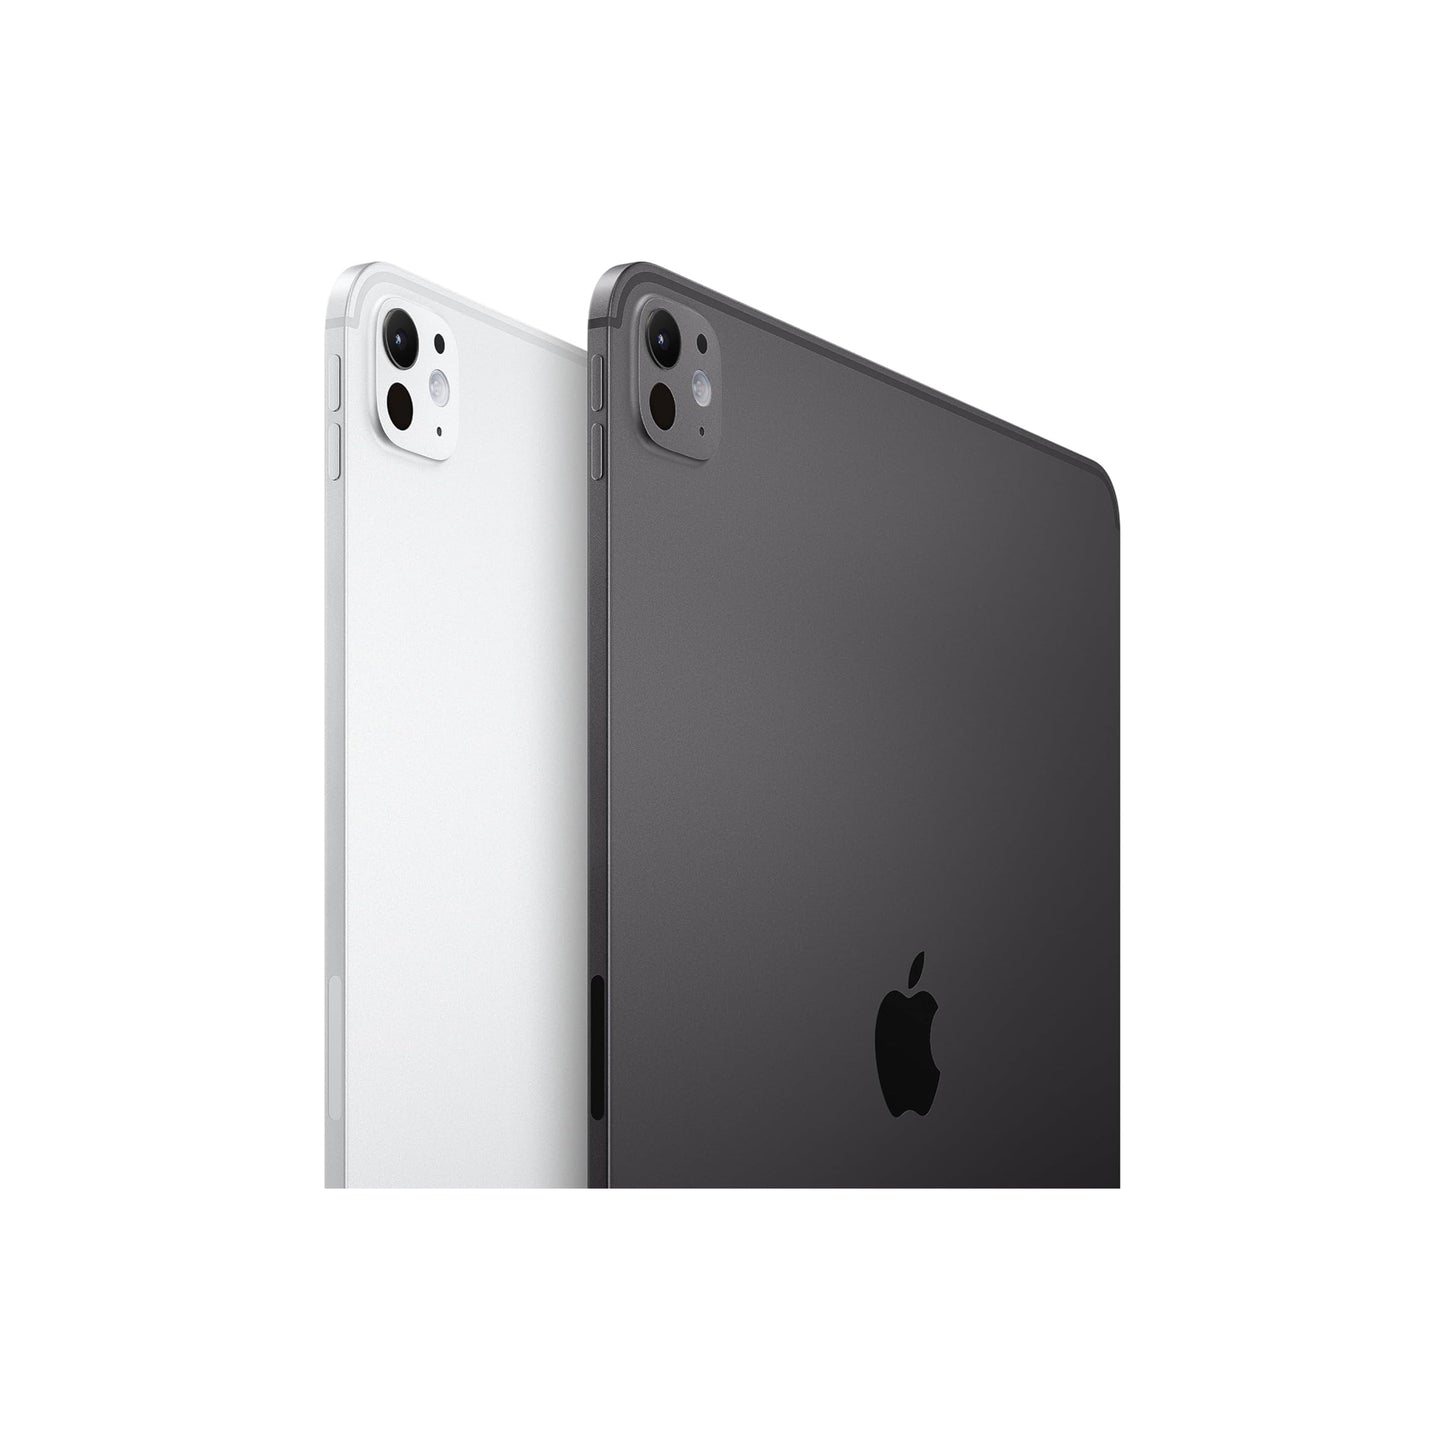 Apple iPad Pro 11 بوصة (M4): شاشة Ultra Retina XDR، 512 جيجابايت، كاميرا أمامية 12 ميجابكسل / كاميرا خلفية 12 ميجابكسل، ماسح ضوئي LiDAR، شبكة Wi-Fi 6E + 5G خلوية مع eSIM، معرف الوجه، عمر بطارية يدوم طوال اليوم - فضي